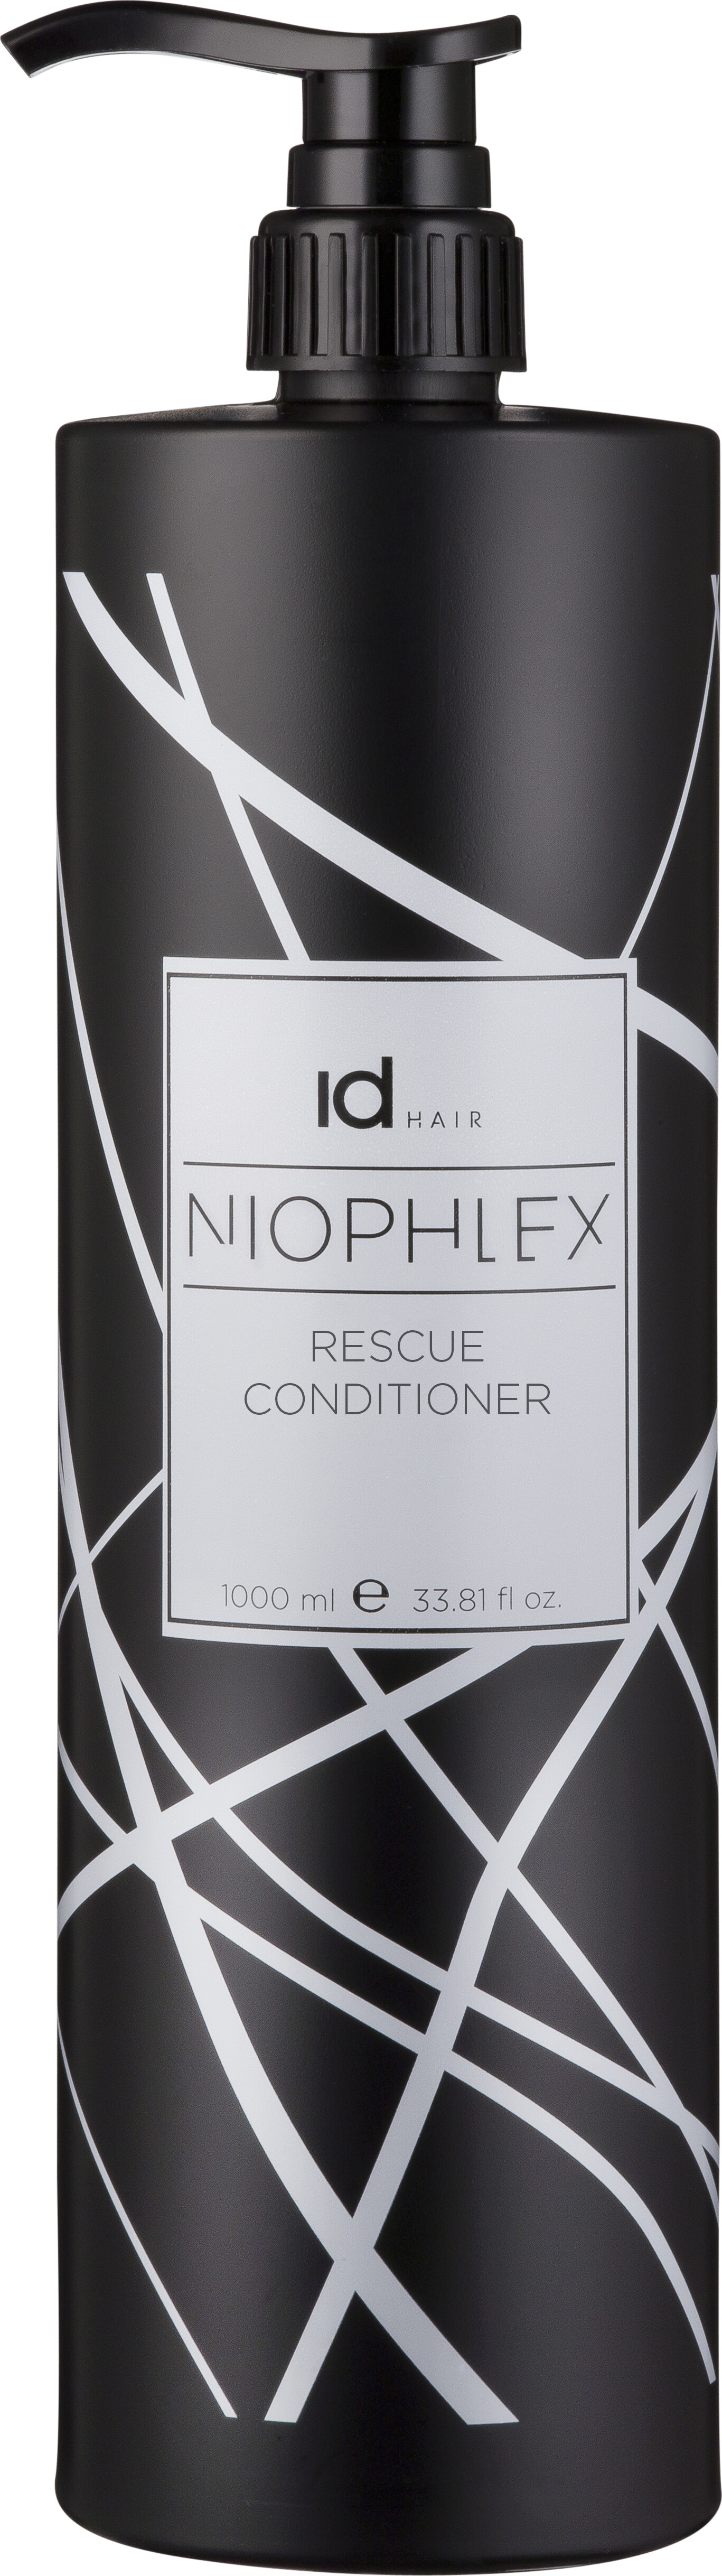 Billede af Id Hair - Niophlex Conditioner 1000 Ml hos Gucca.dk